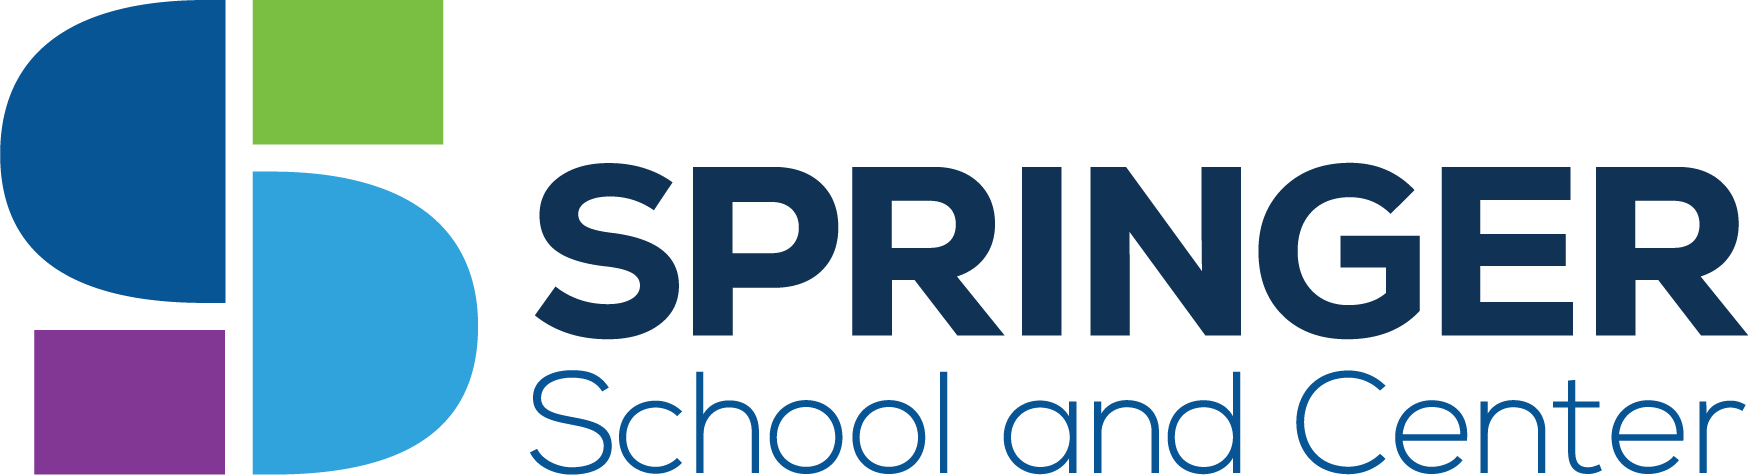 Springer School and Center logo